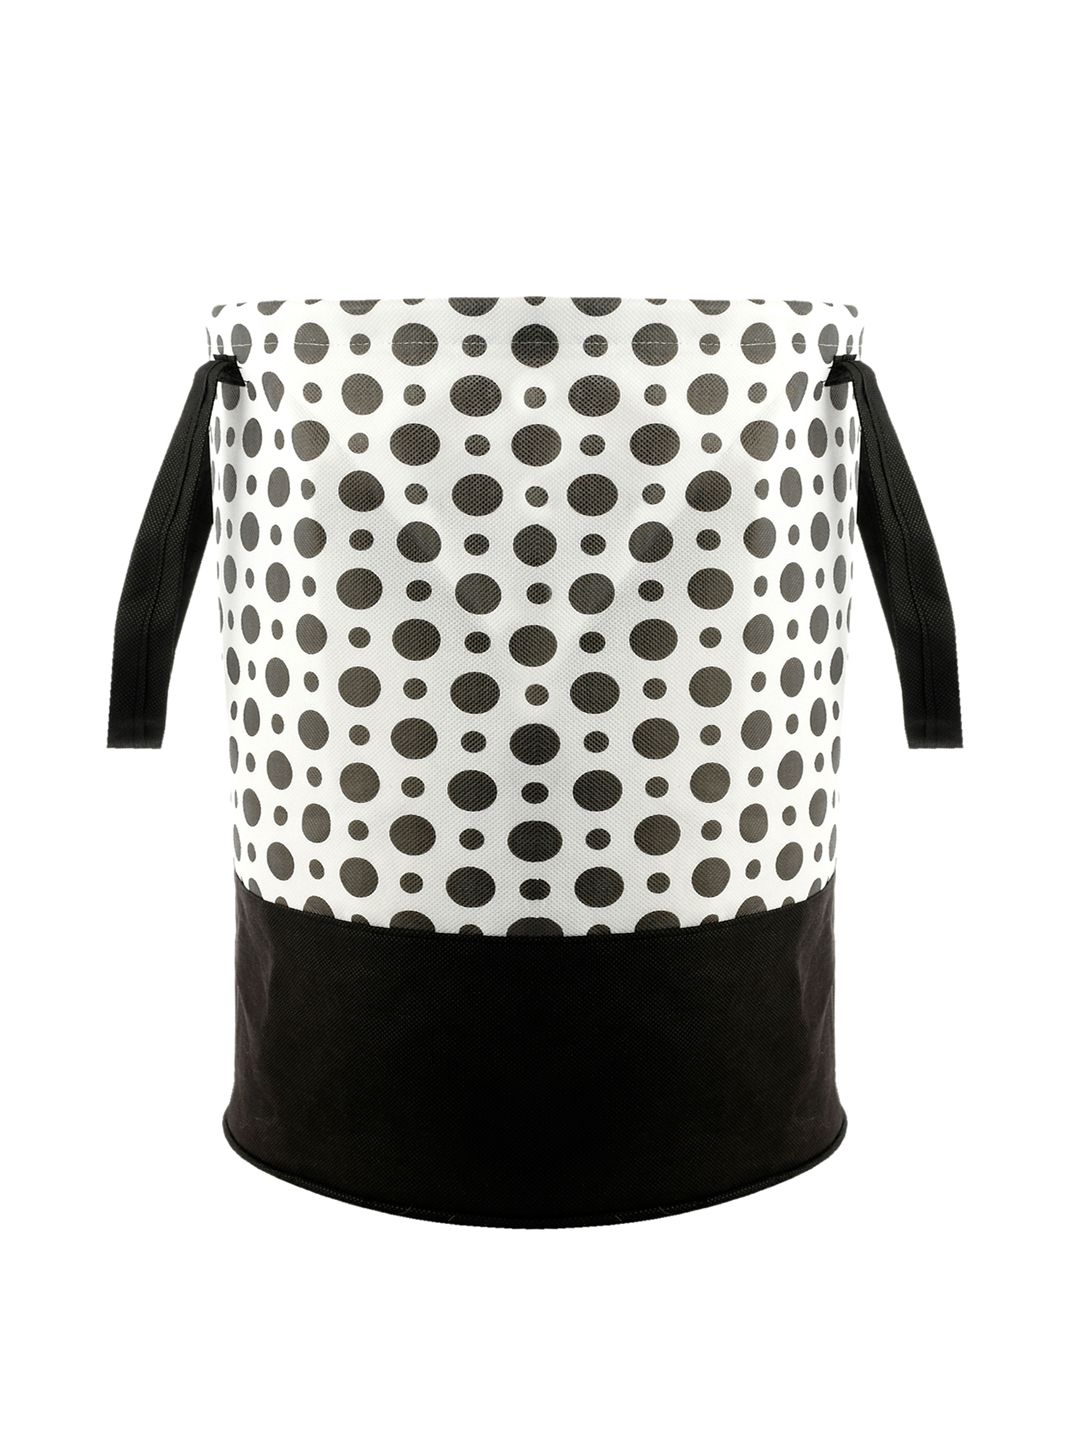 Kuber Industries Black & White Polka Dot Print Waterproof Canvas Laundry Bag 45 L Price in India